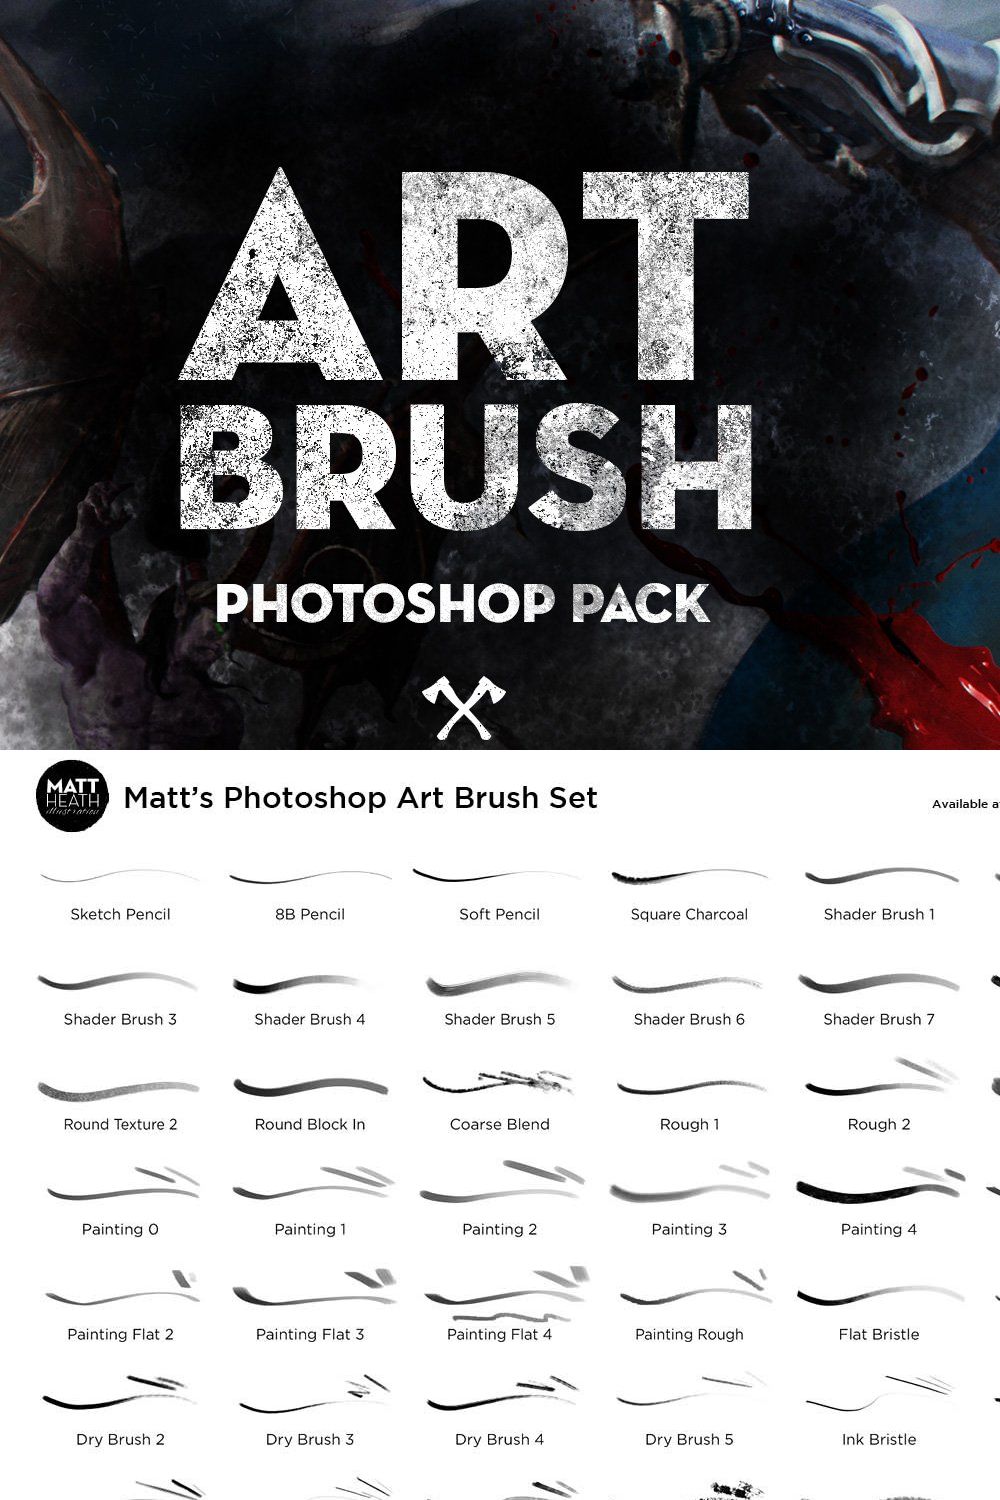 Matt's Photoshop Art Brush Set pinterest preview image.